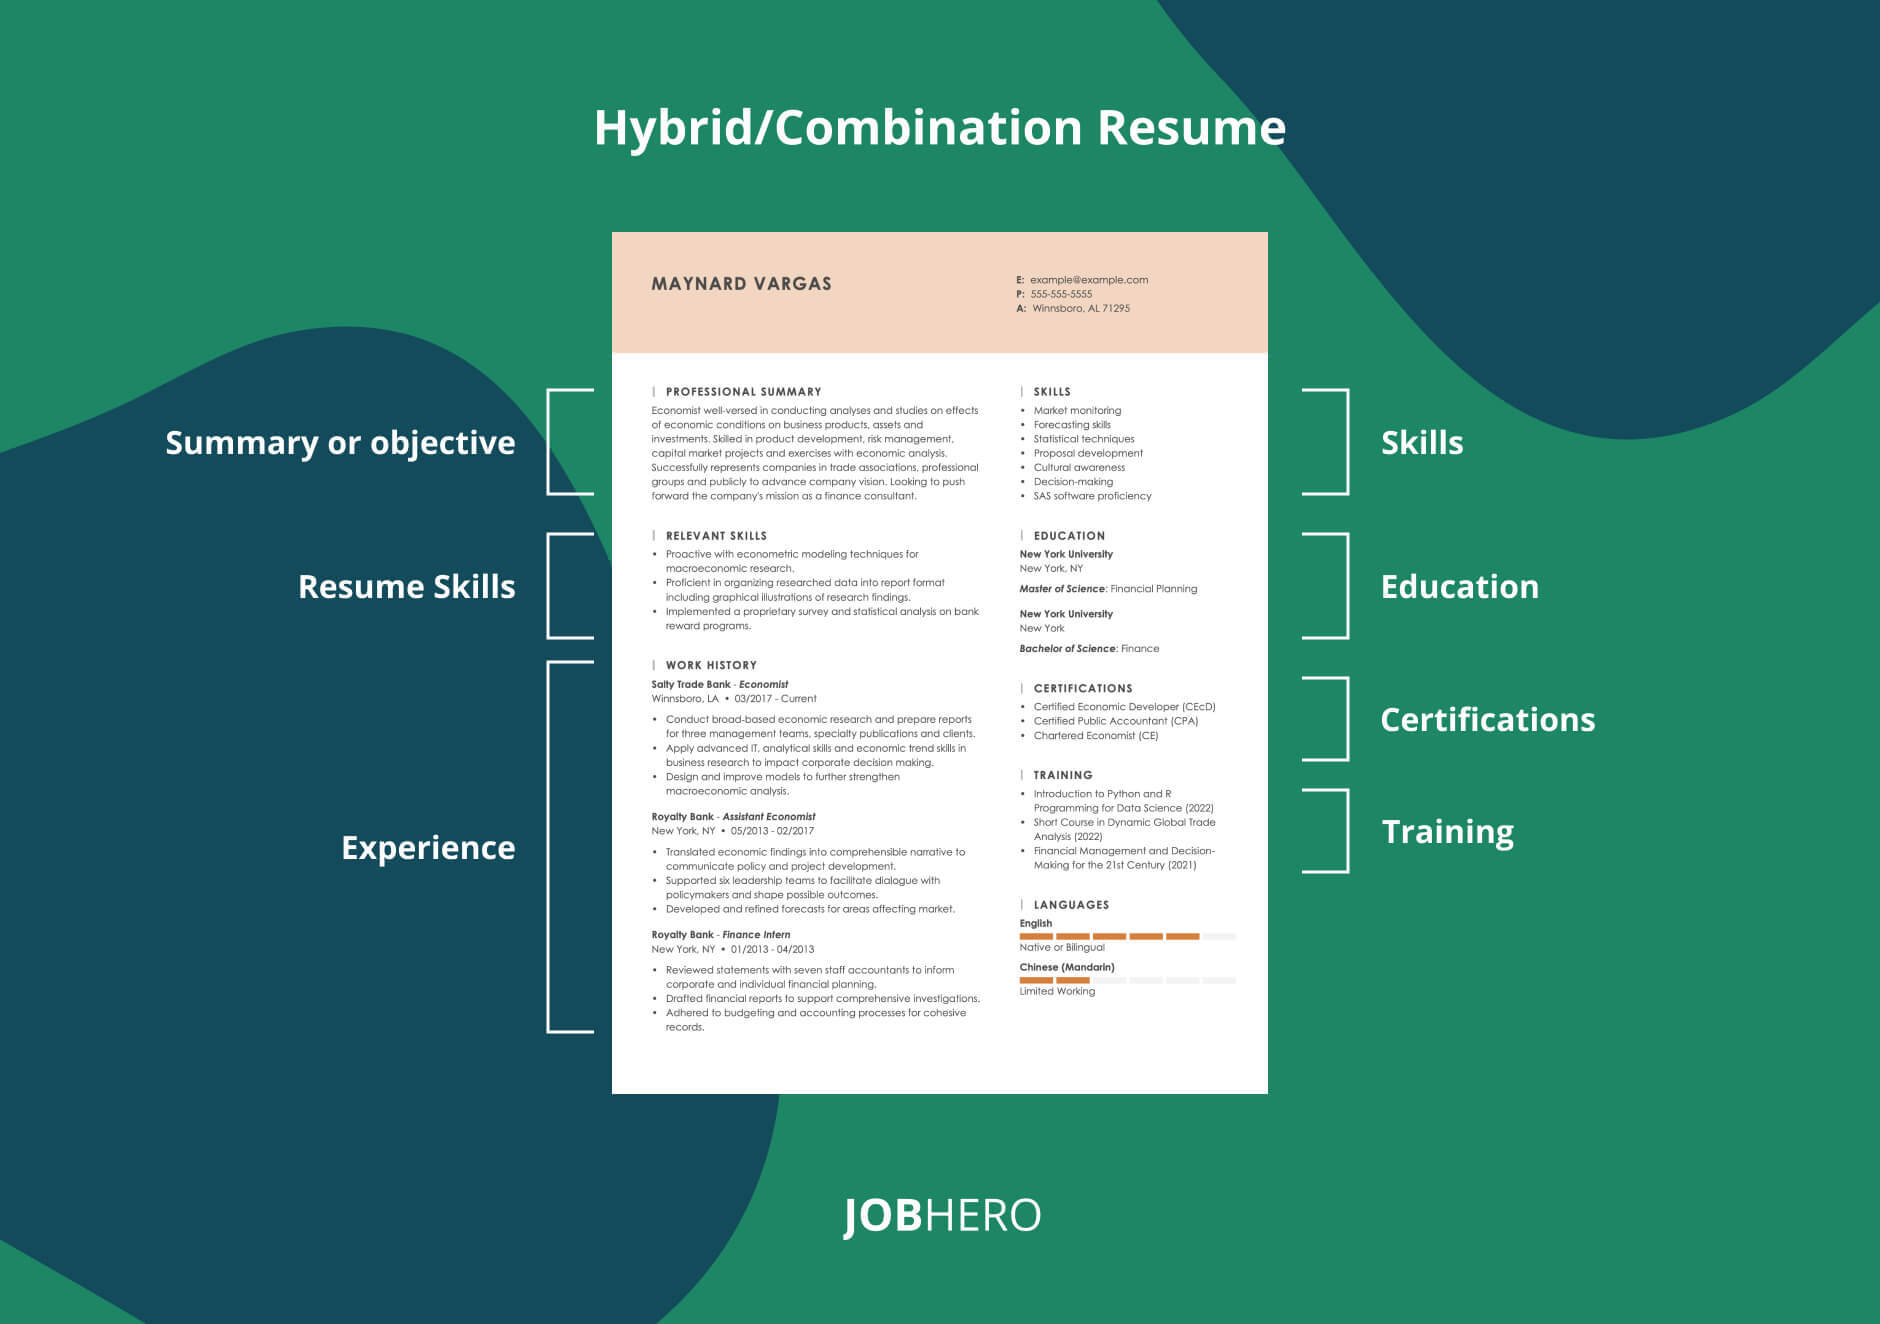 Hybrid/Combination Resume